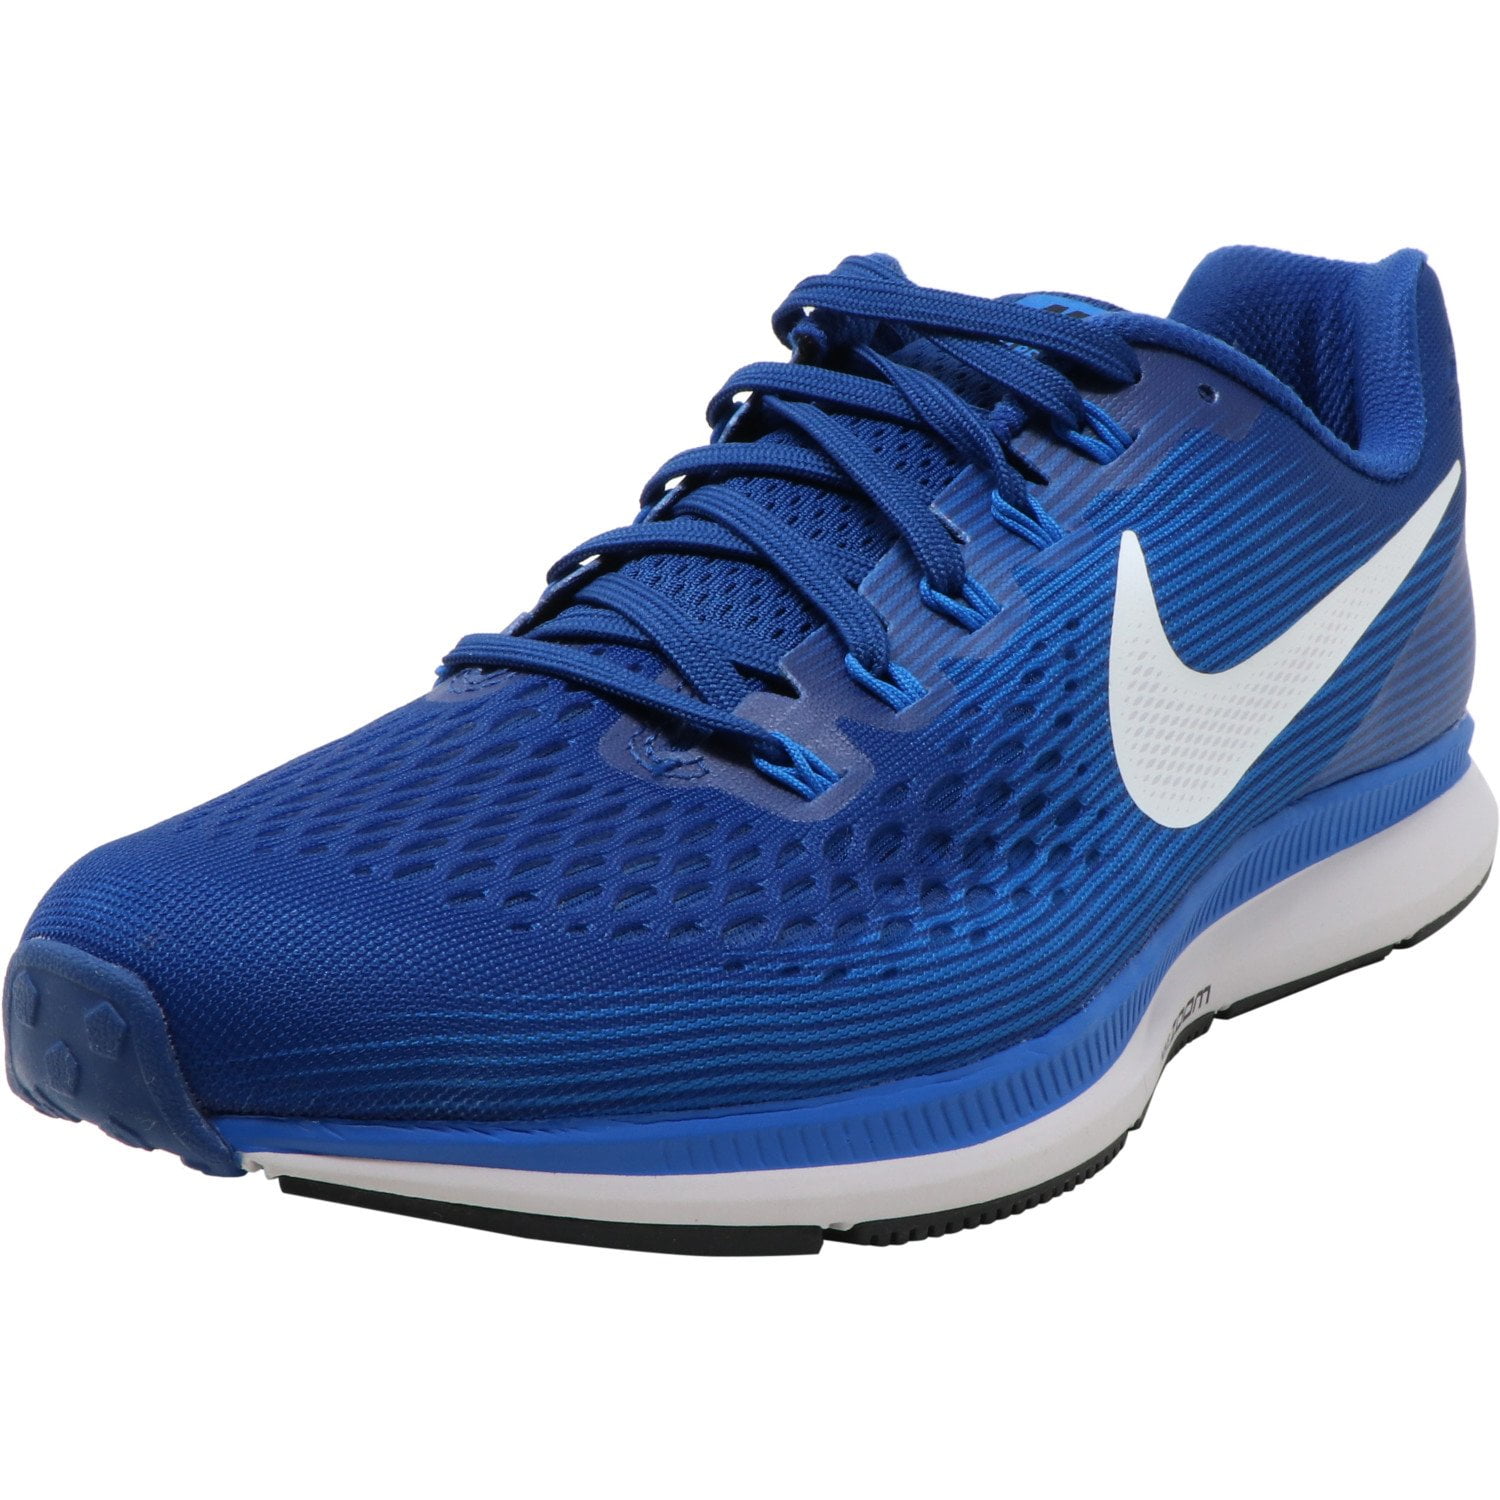 vistazo aburrido Respectivamente Nike Men's Air Zoom Pegasus 34 Gym Blue / Sail Nebula Ankle-High Running -  10.5M - Walmart.com